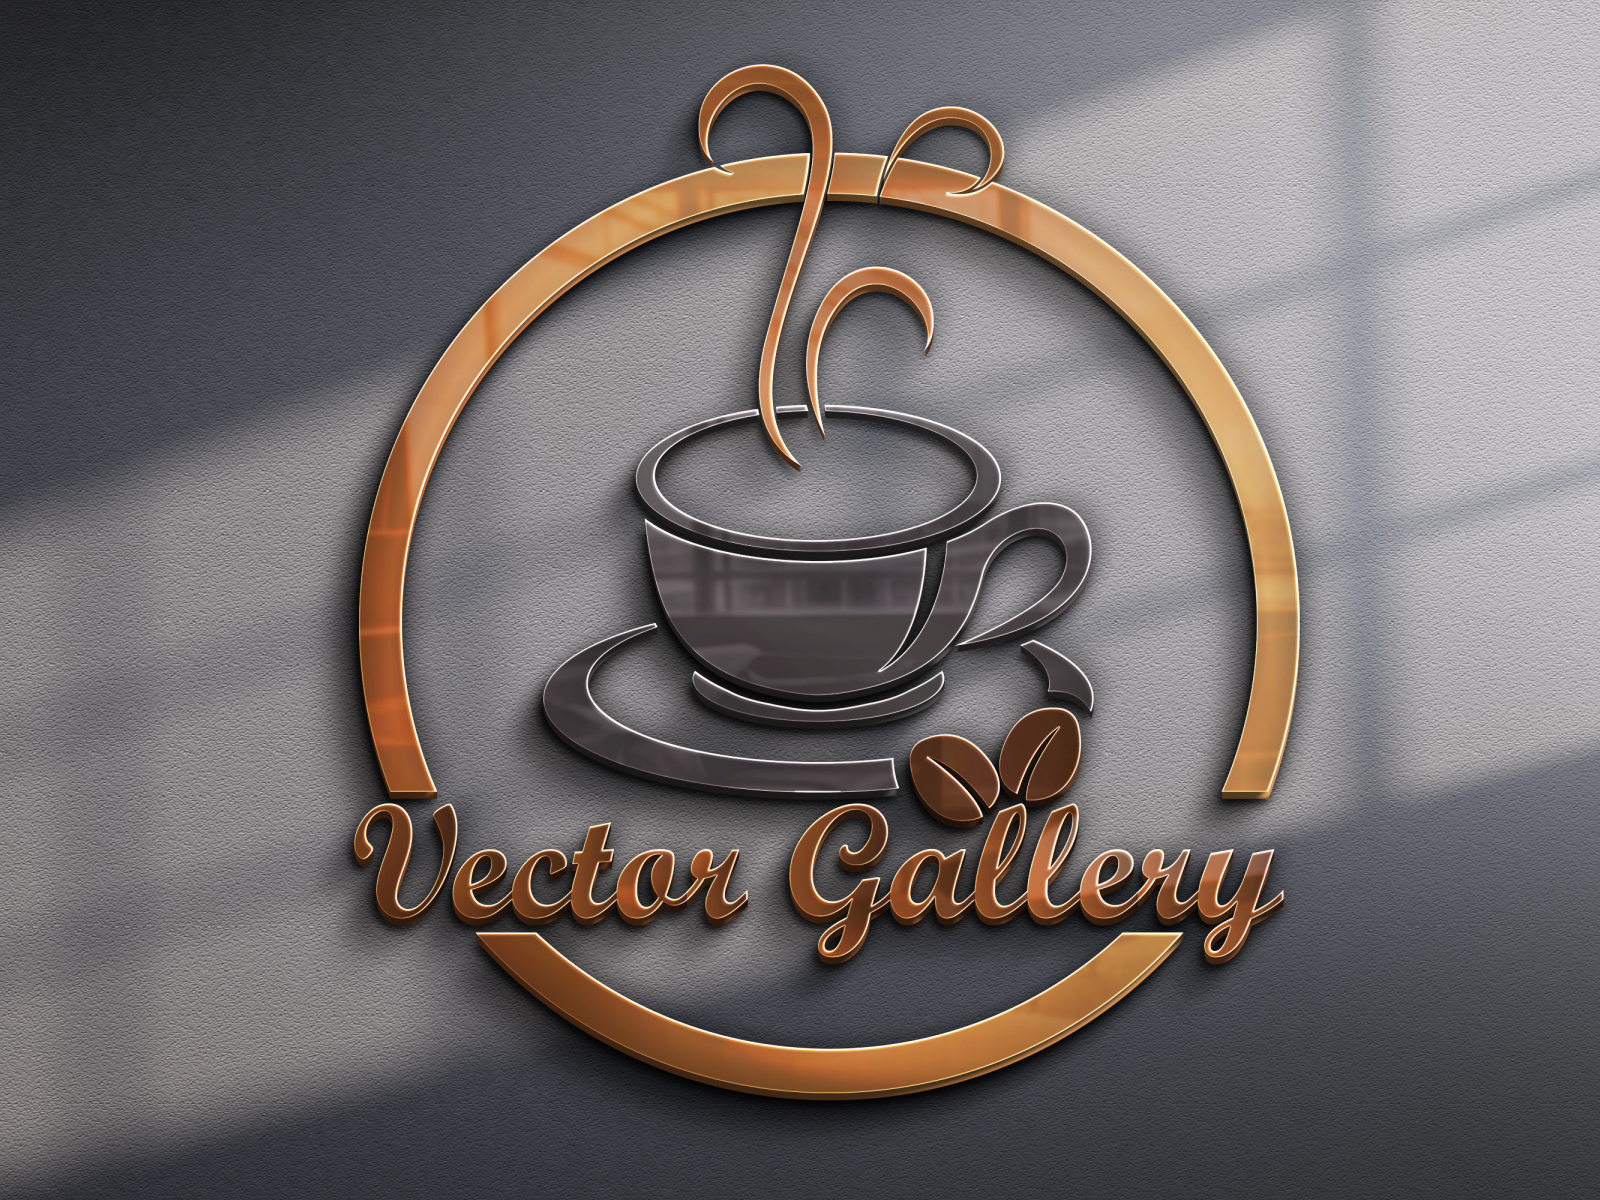 The Coffee Shop Free Logo by Adeesha Uddeeptha on Dribbble